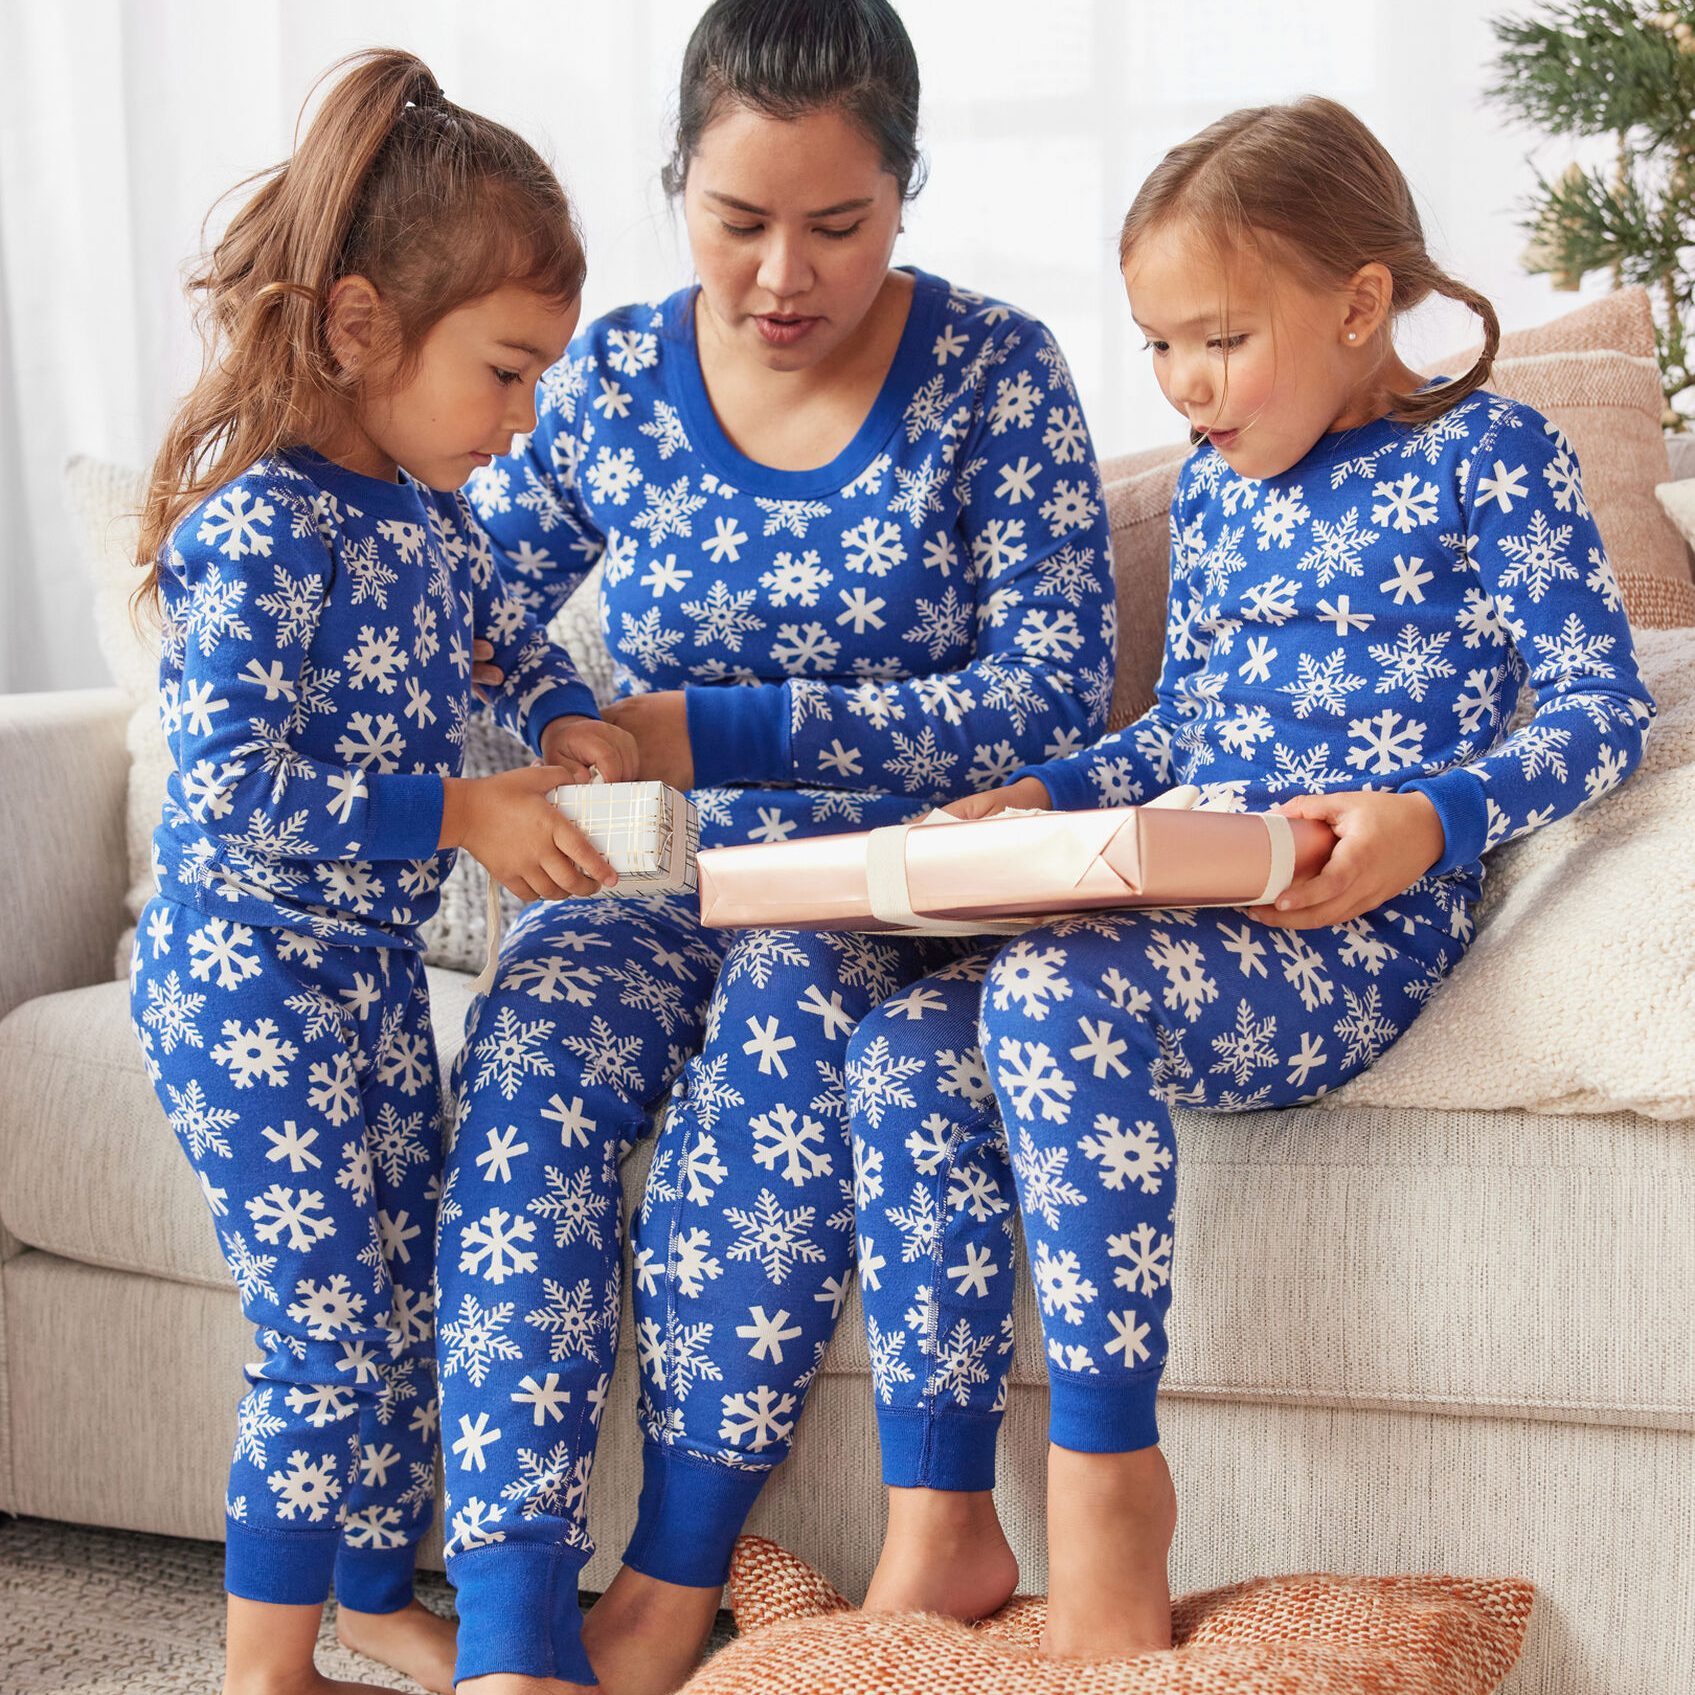 Matching Snowflake Christmas Pajamas Ecomm